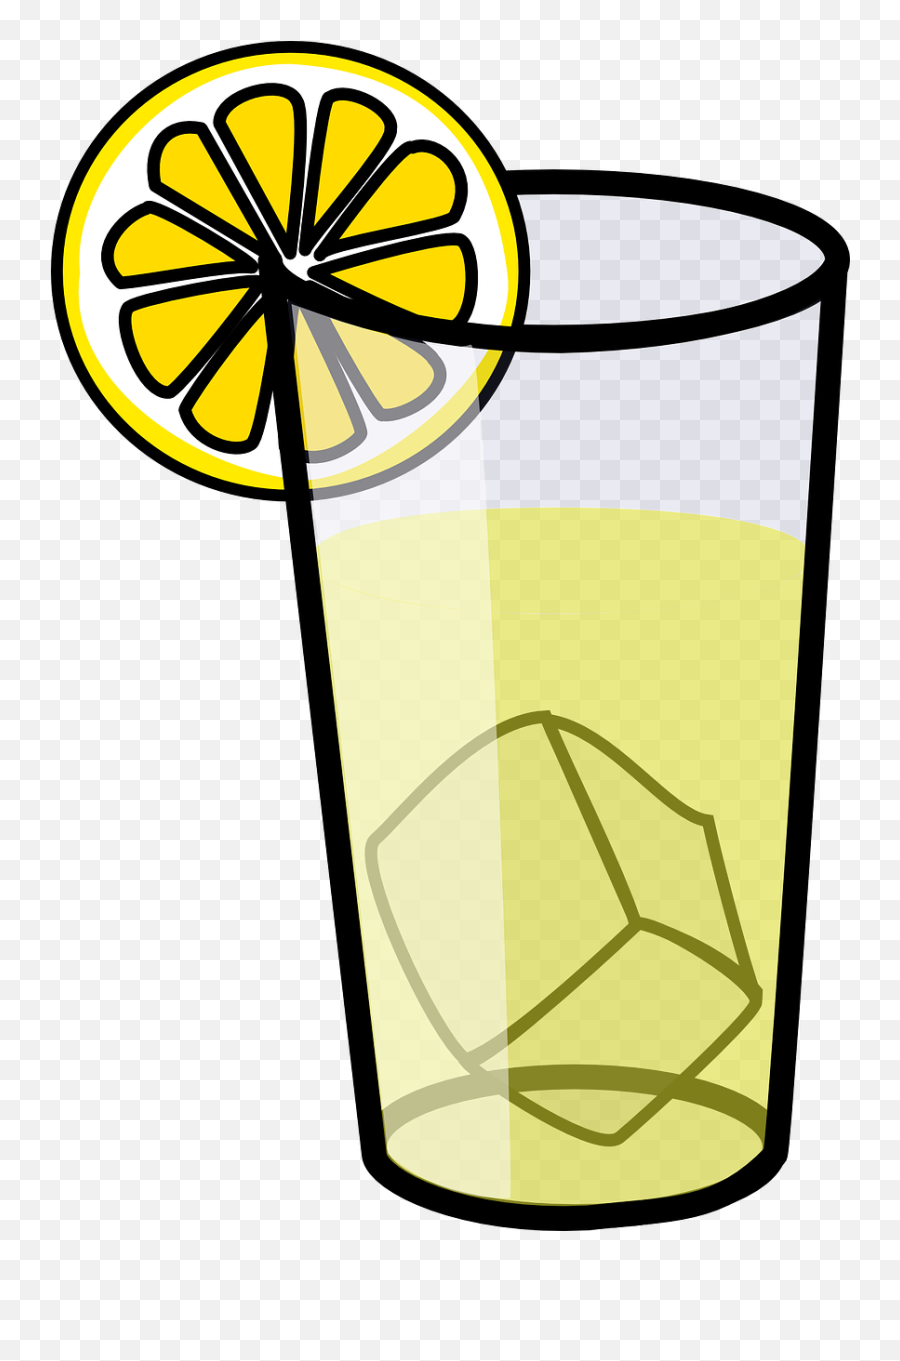 Lemonade Glass Drink Beverage Png Image - Clip Art Lemonade Emoji,Pictures Of Lemonade Emojis That The Lemonade Emojis Have